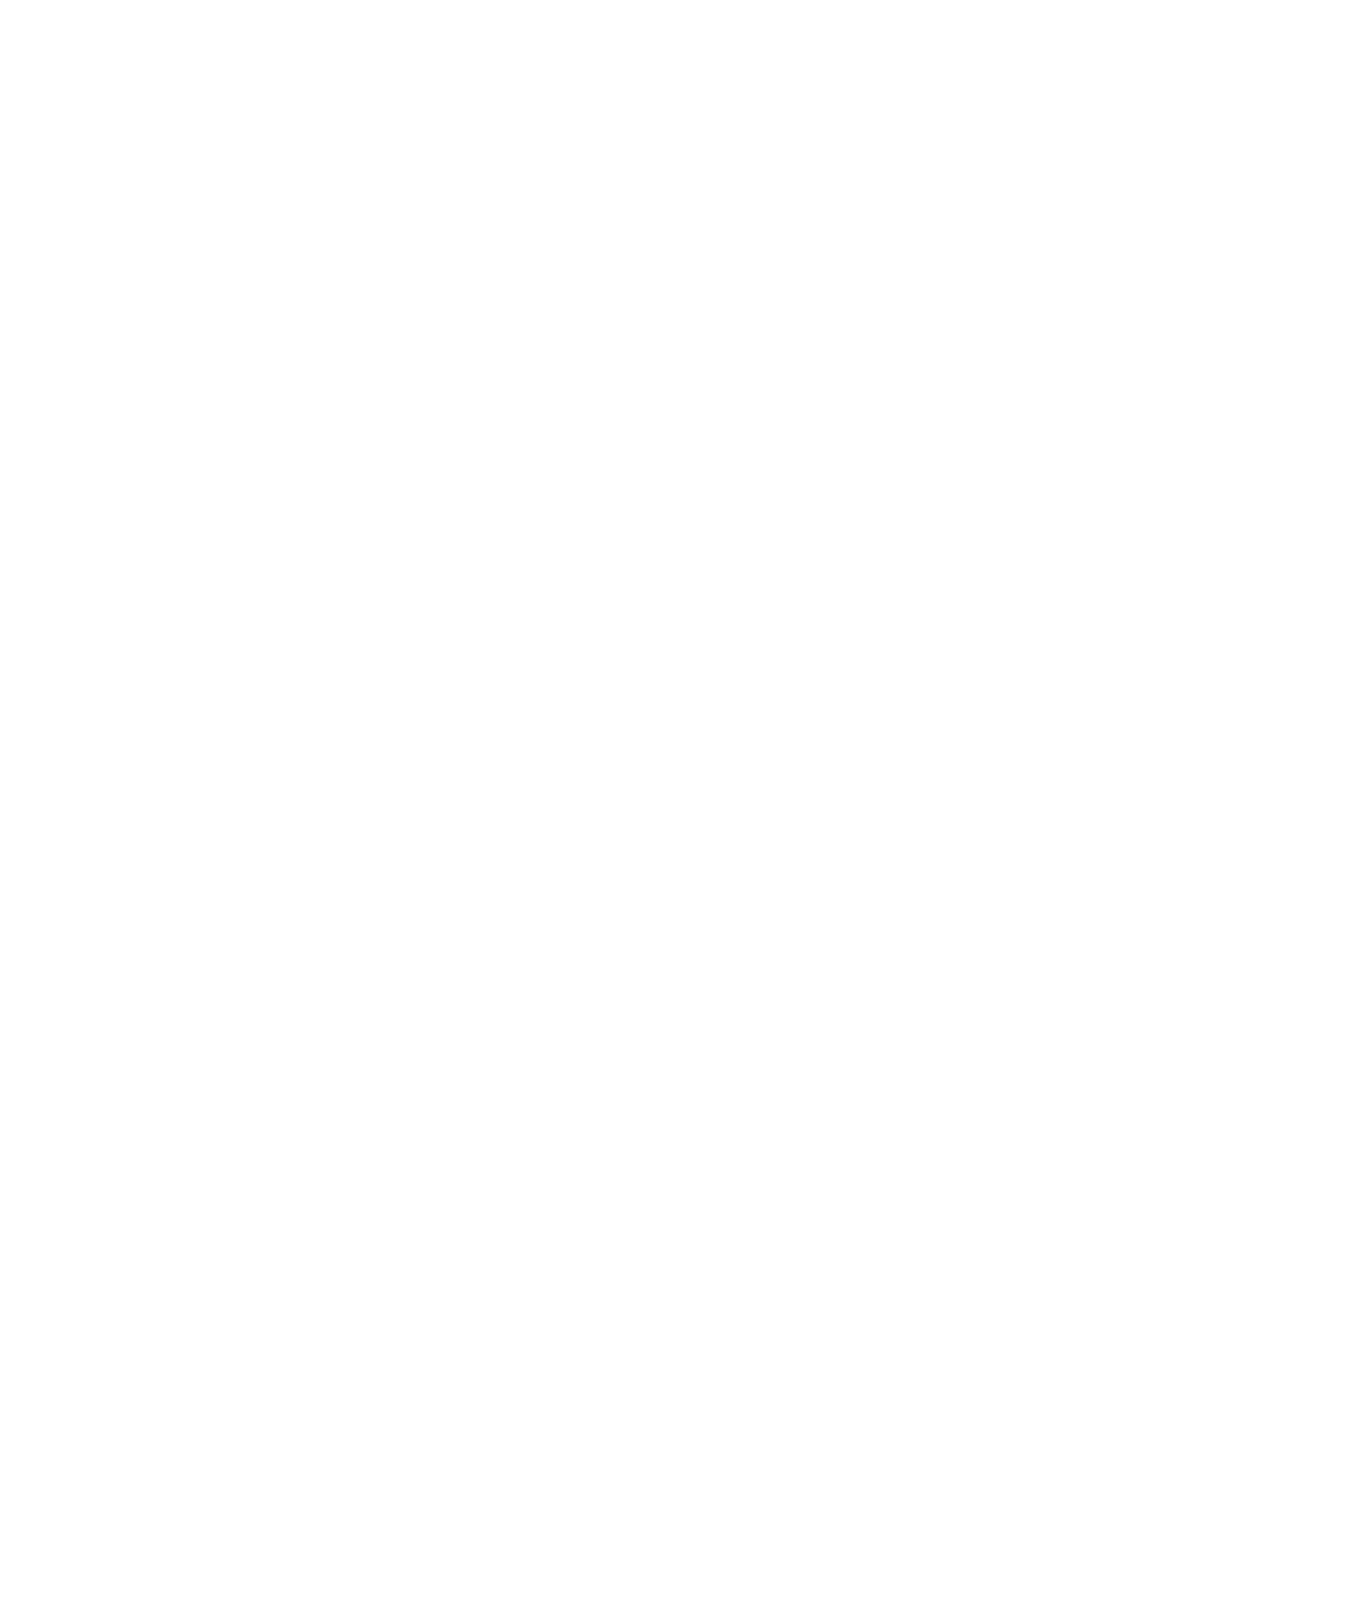 Cintas logo pour fonds sombres (PNG transparent)